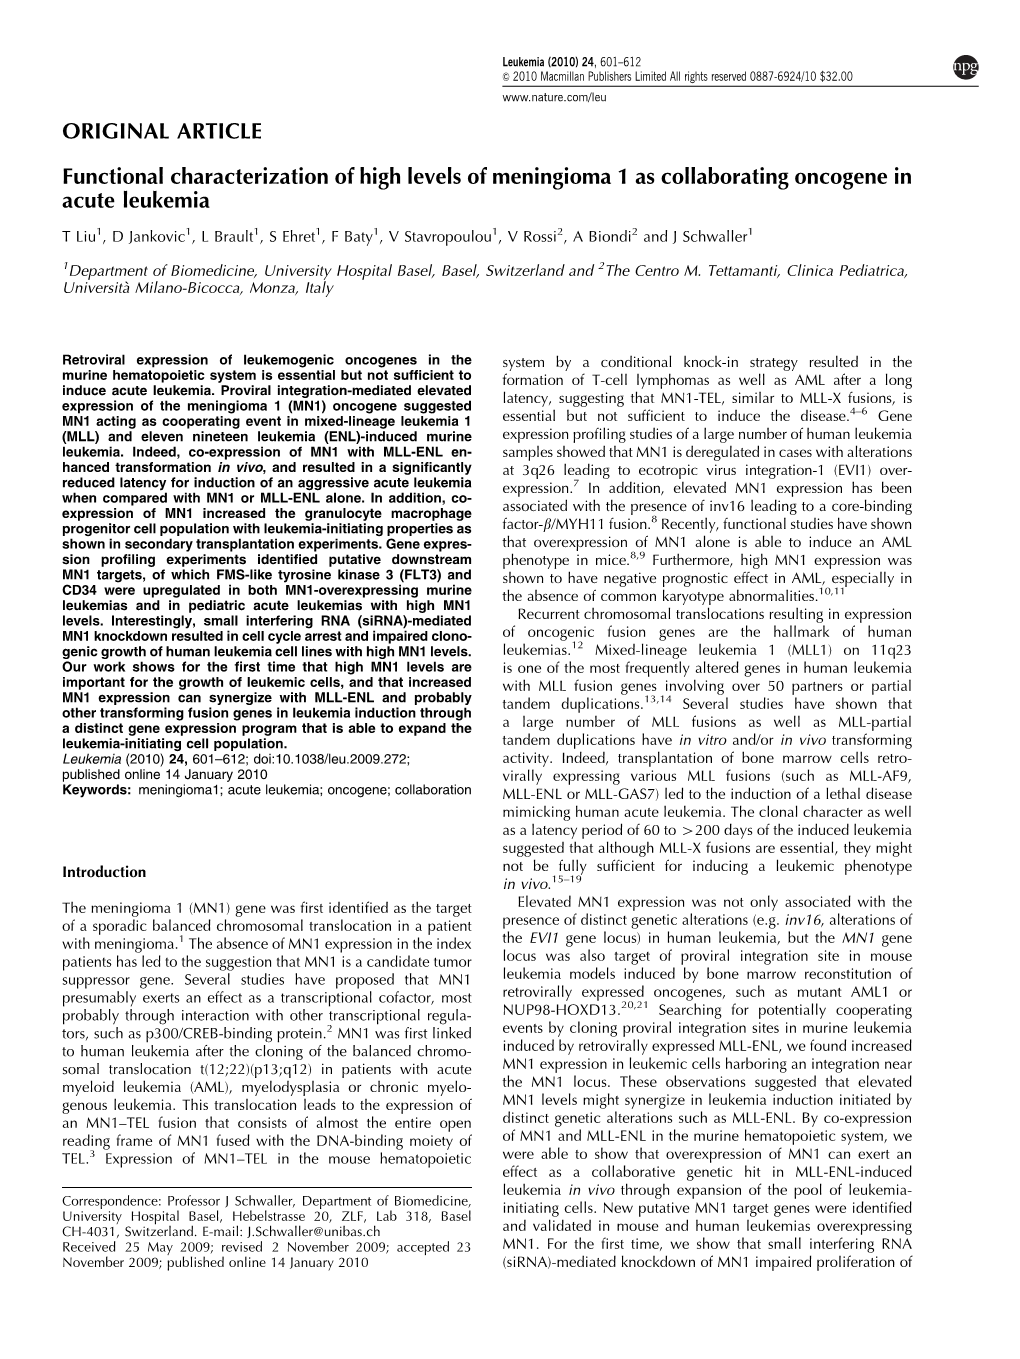 Functional Characterization of High Levels of Meningioma 1 As Collaborating Oncogene in Acute Leukemia